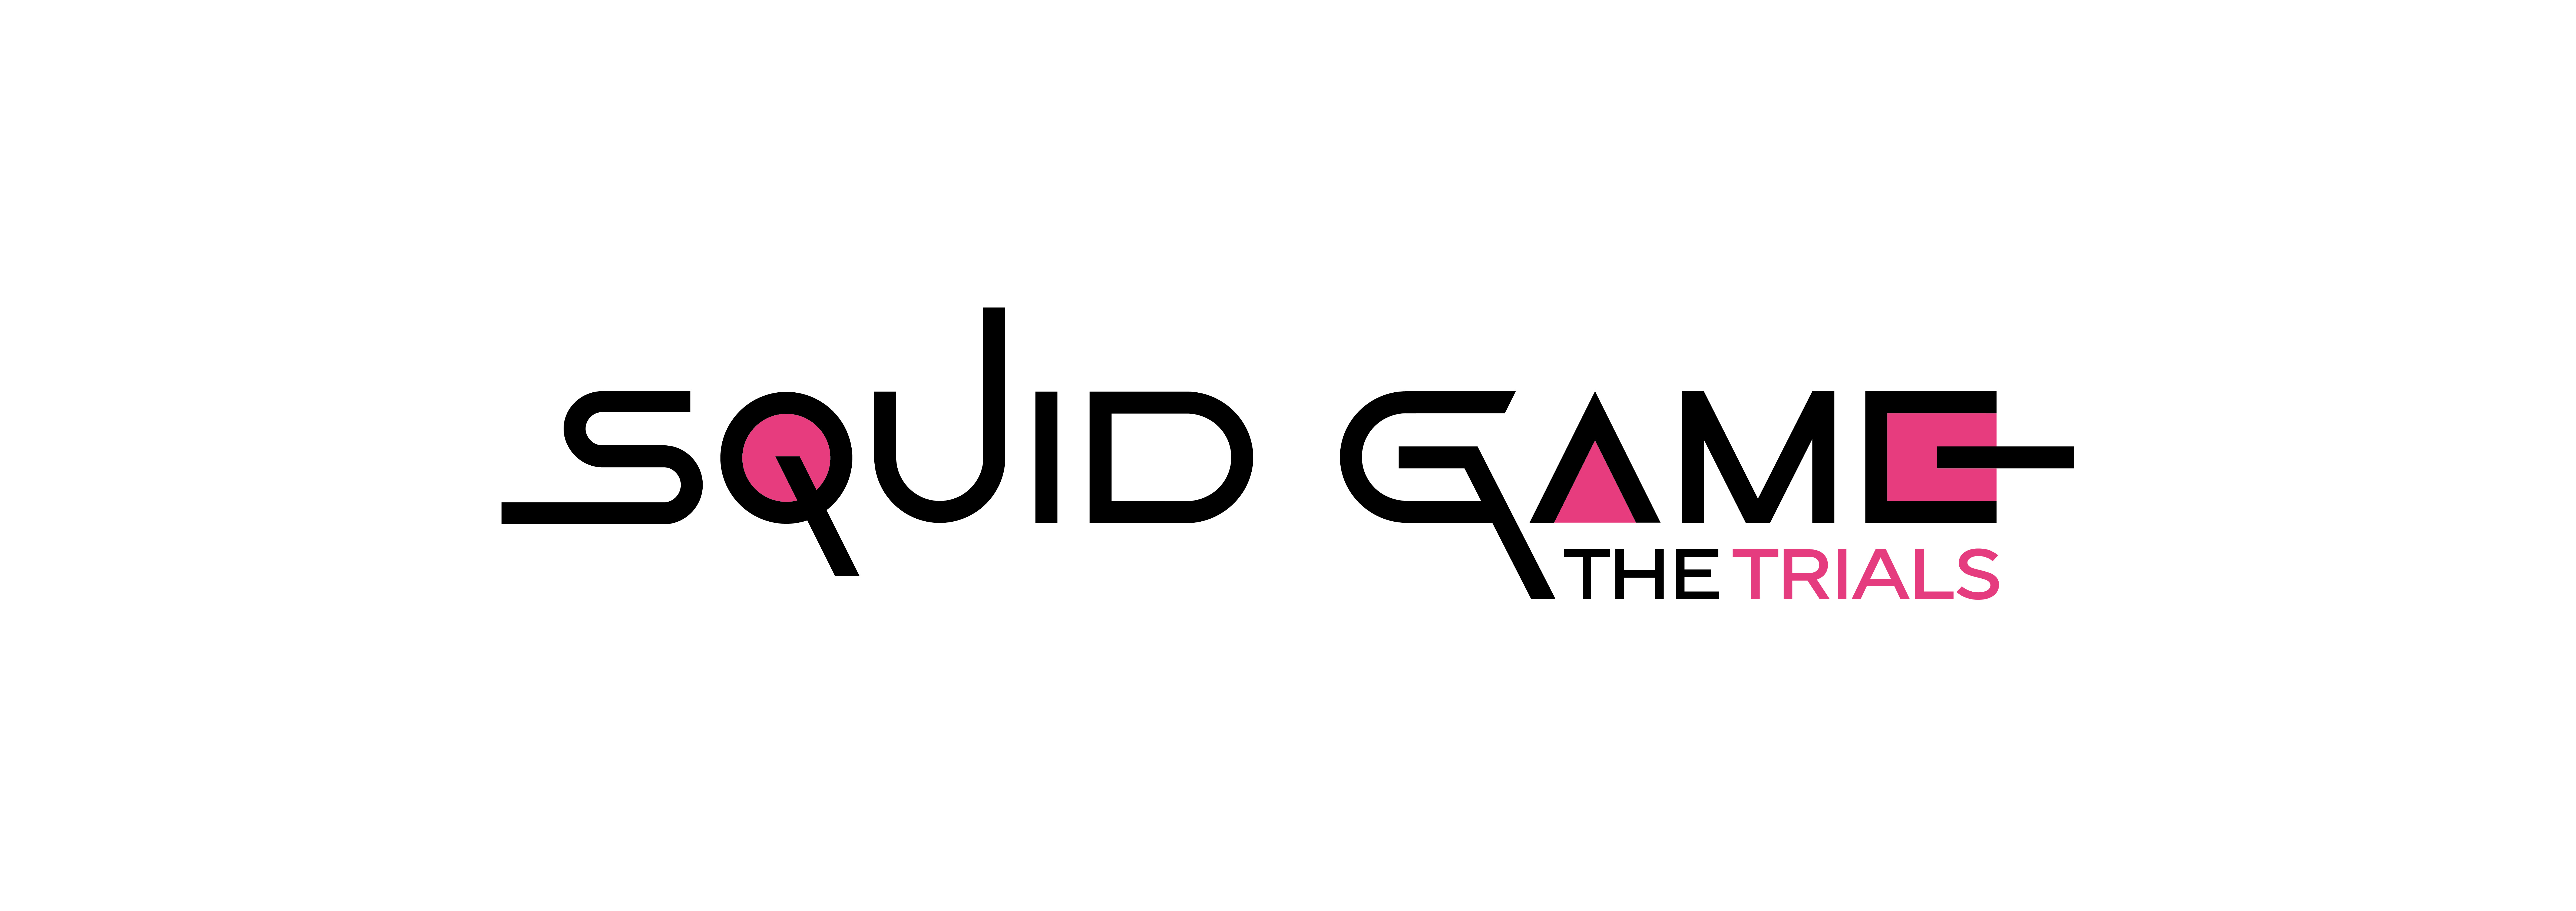 Squid Game The Trials Live Los Angeles Experience - Netflix Tudum